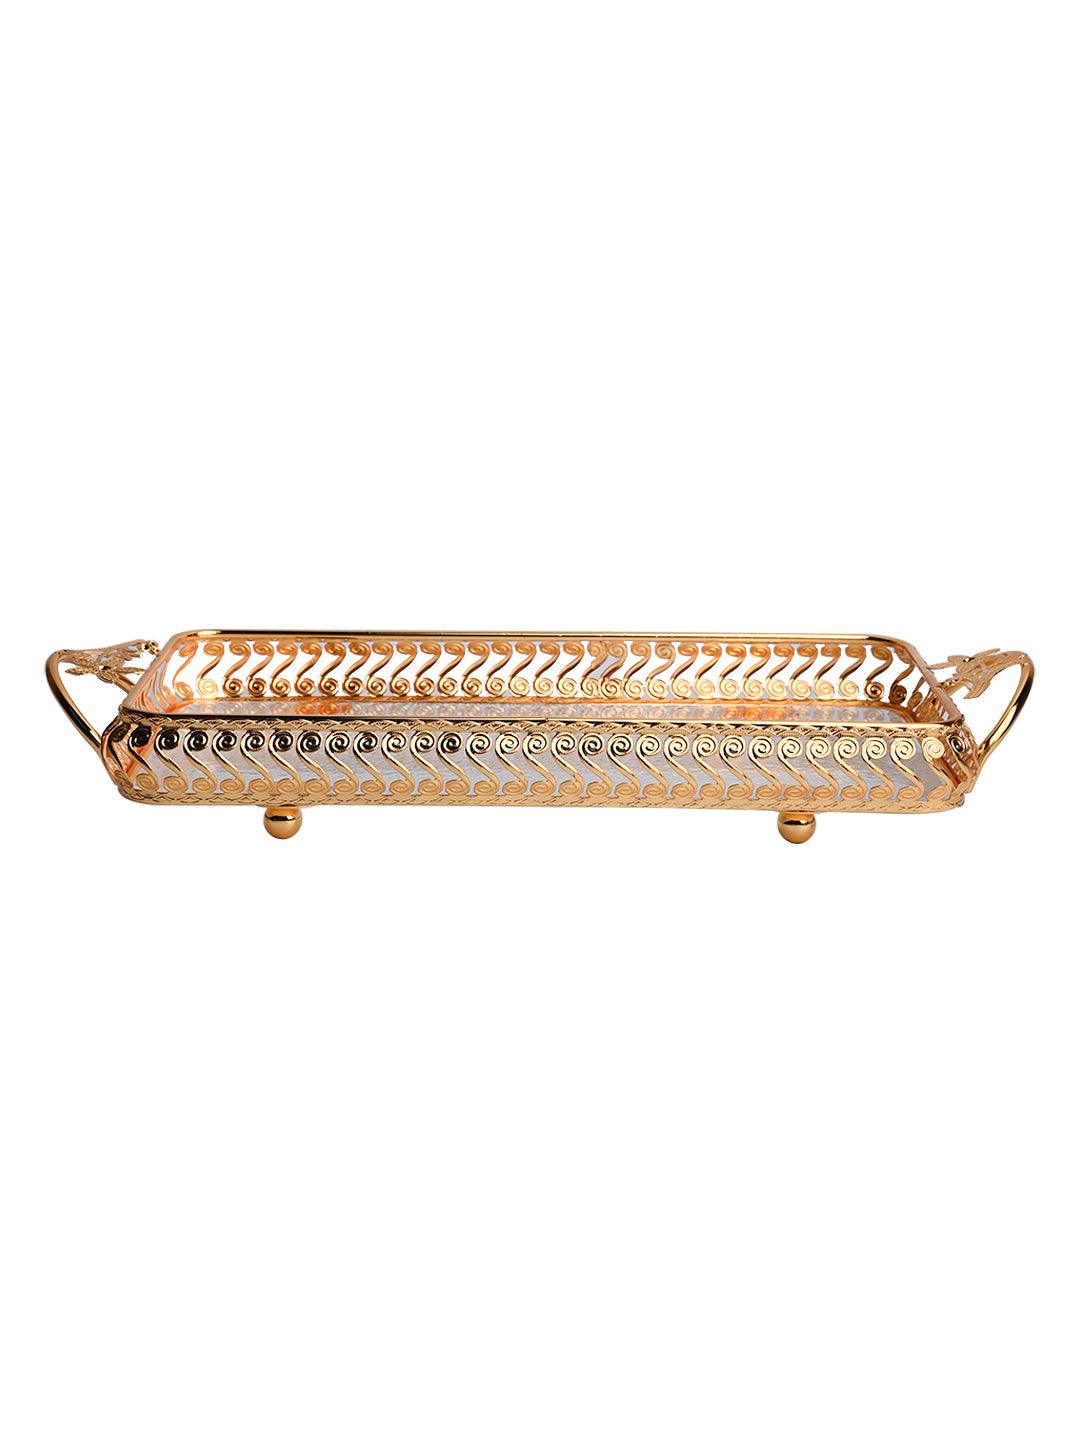 Golden Decorative Tray - MARKET99